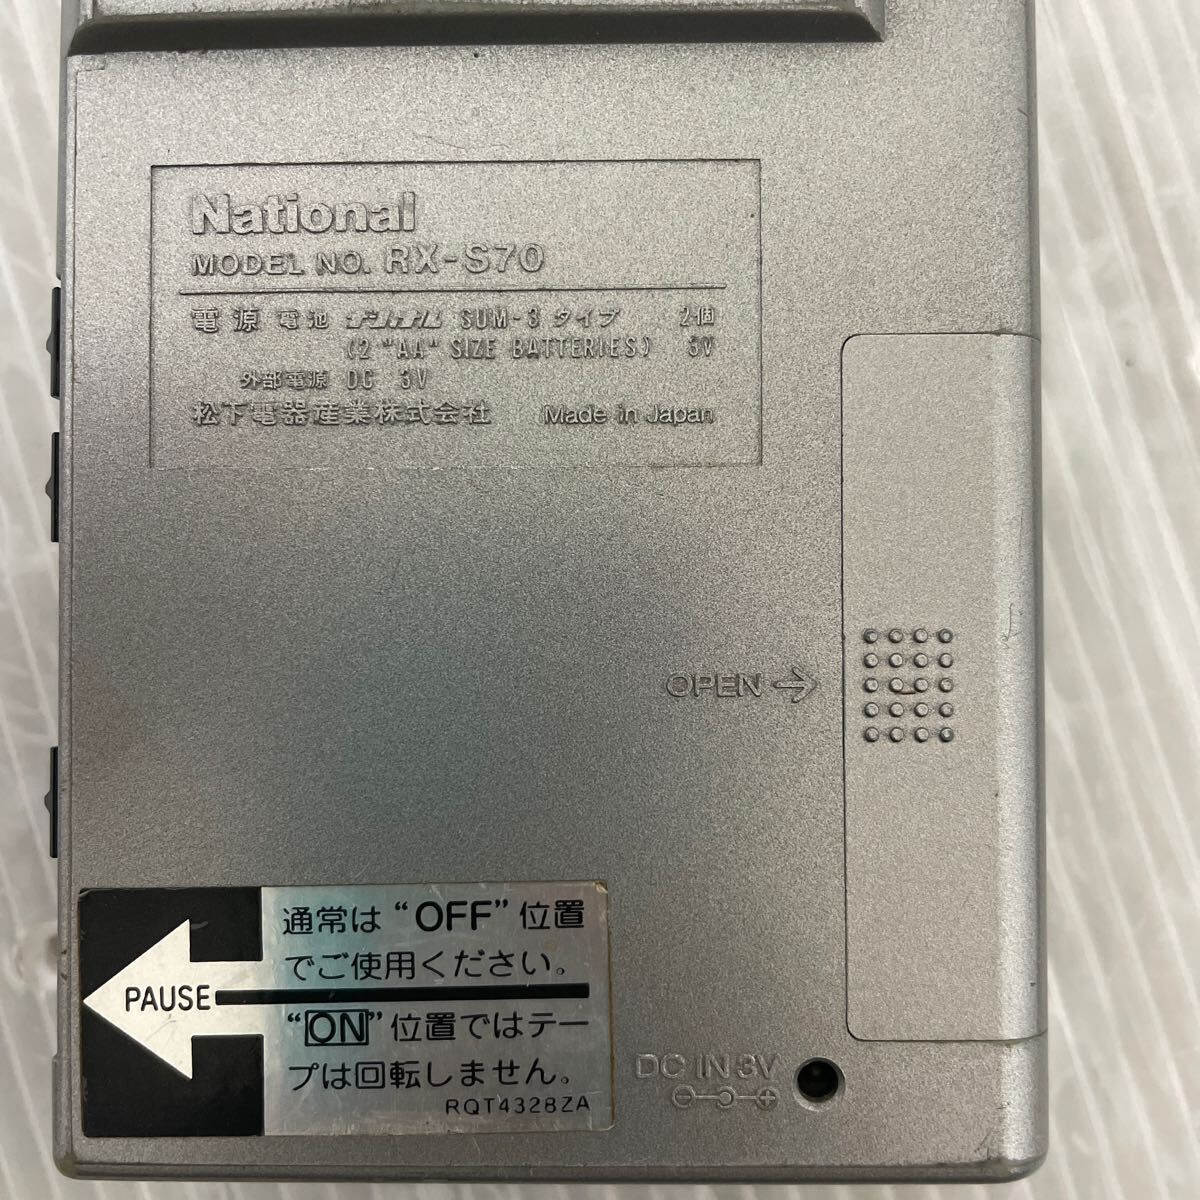 National RQ-WJ1/RX-S70 TR28 текущее состояние товар SONY Walkman WM-F202/TCM-450/D-NE730/ Panasonic SL-CT510 7 шт. совместно 